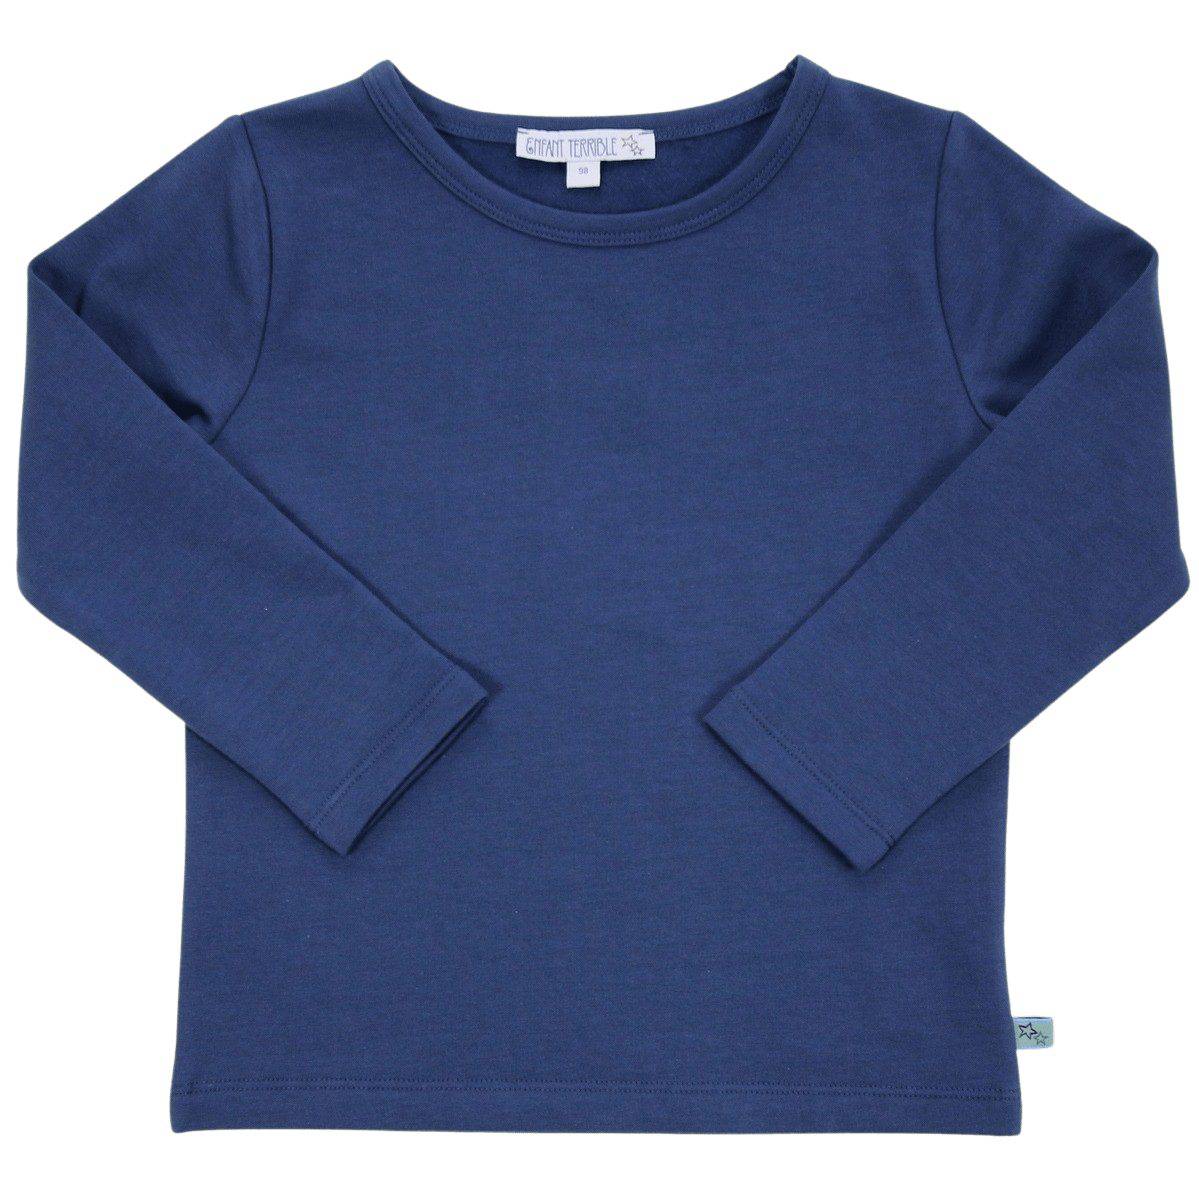 Thermoshirt blau von Enfant Terrible